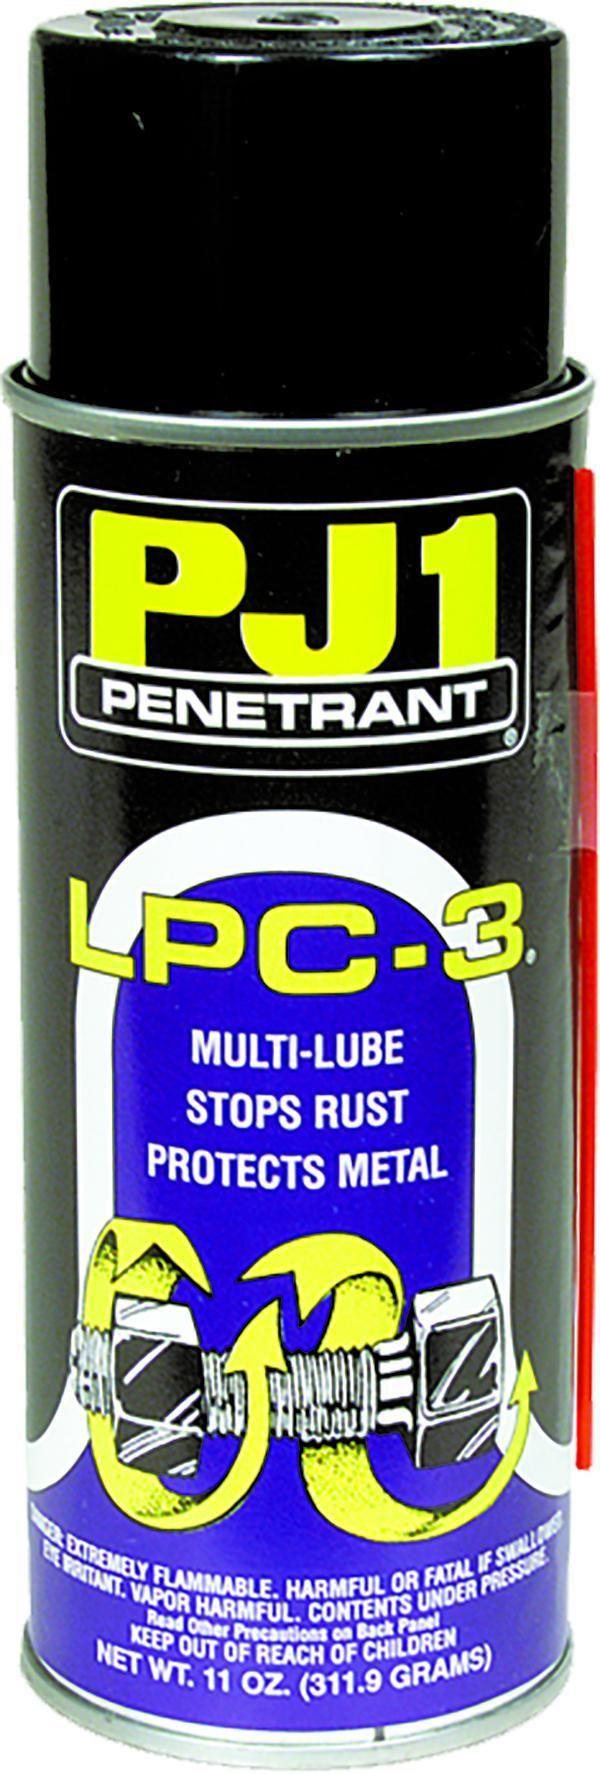 3JK9-PJ1-12-11 LPC-3 Penetrant - Lubricant - 11oz.